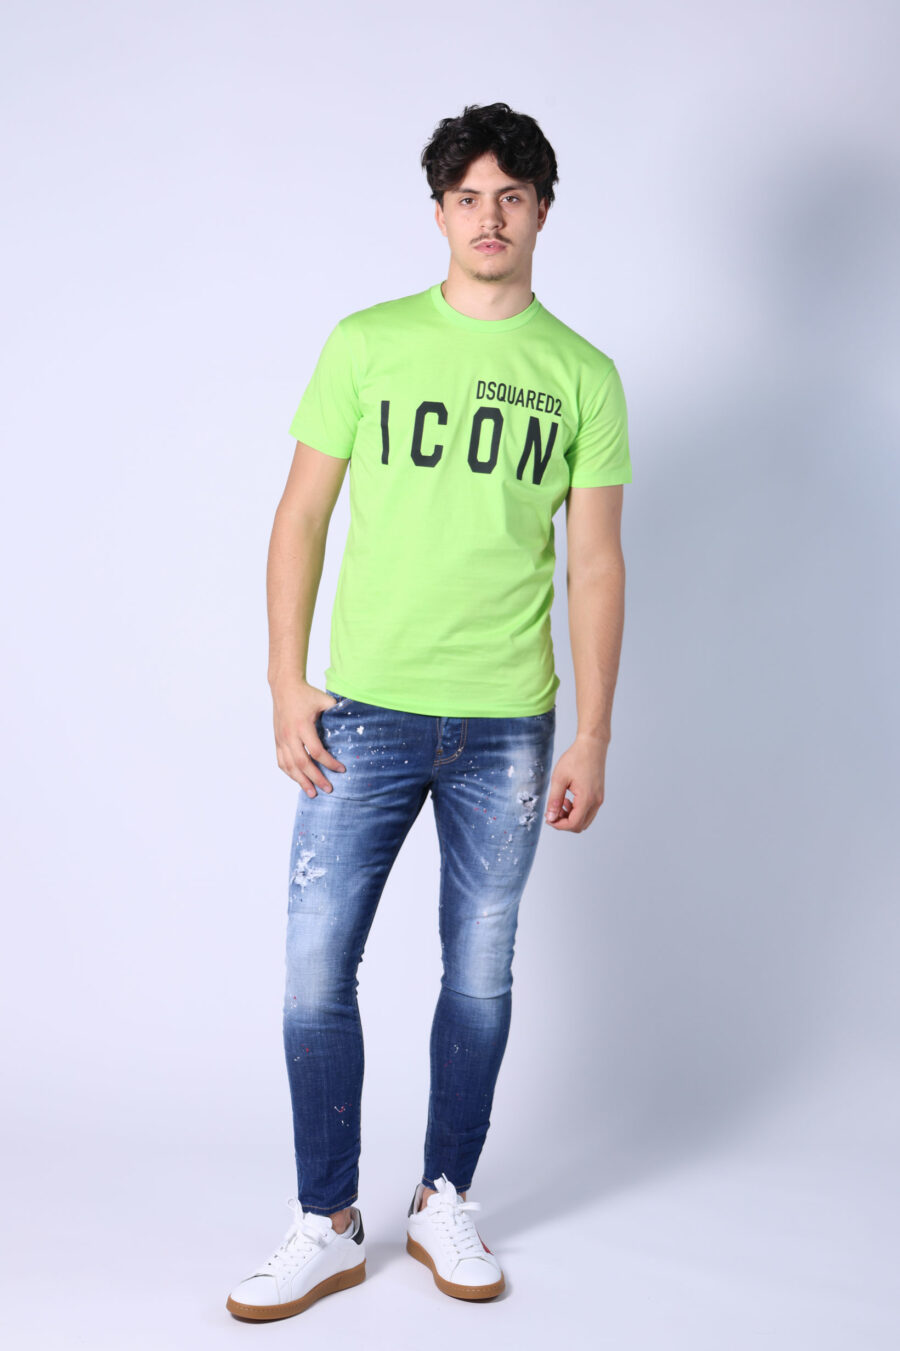 T-shirt verde lima com maxilogo "icon" preto - Untitled Catalog 05394